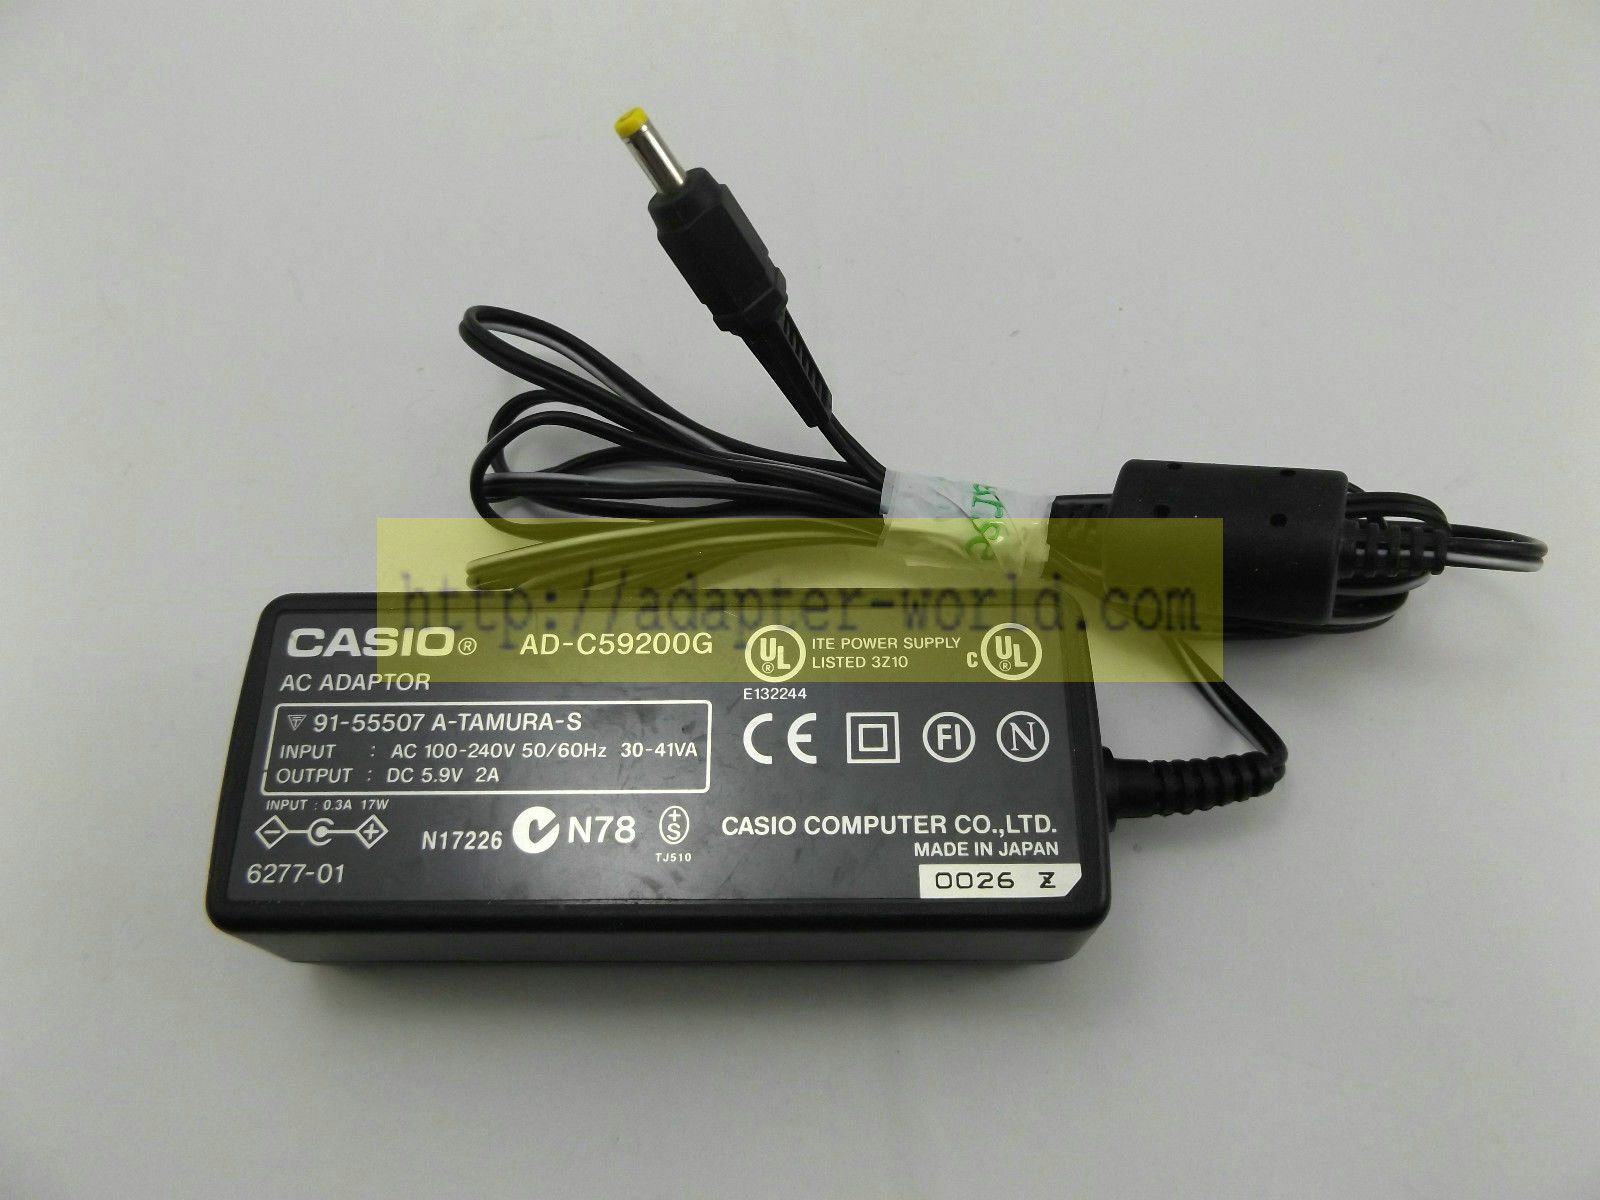 *Brand NEW*Casio DC 5.9V 2A AC Adaptor AD-C59200G Input 100-240V 50-60Hz 30-41VA POWER SUPPLY